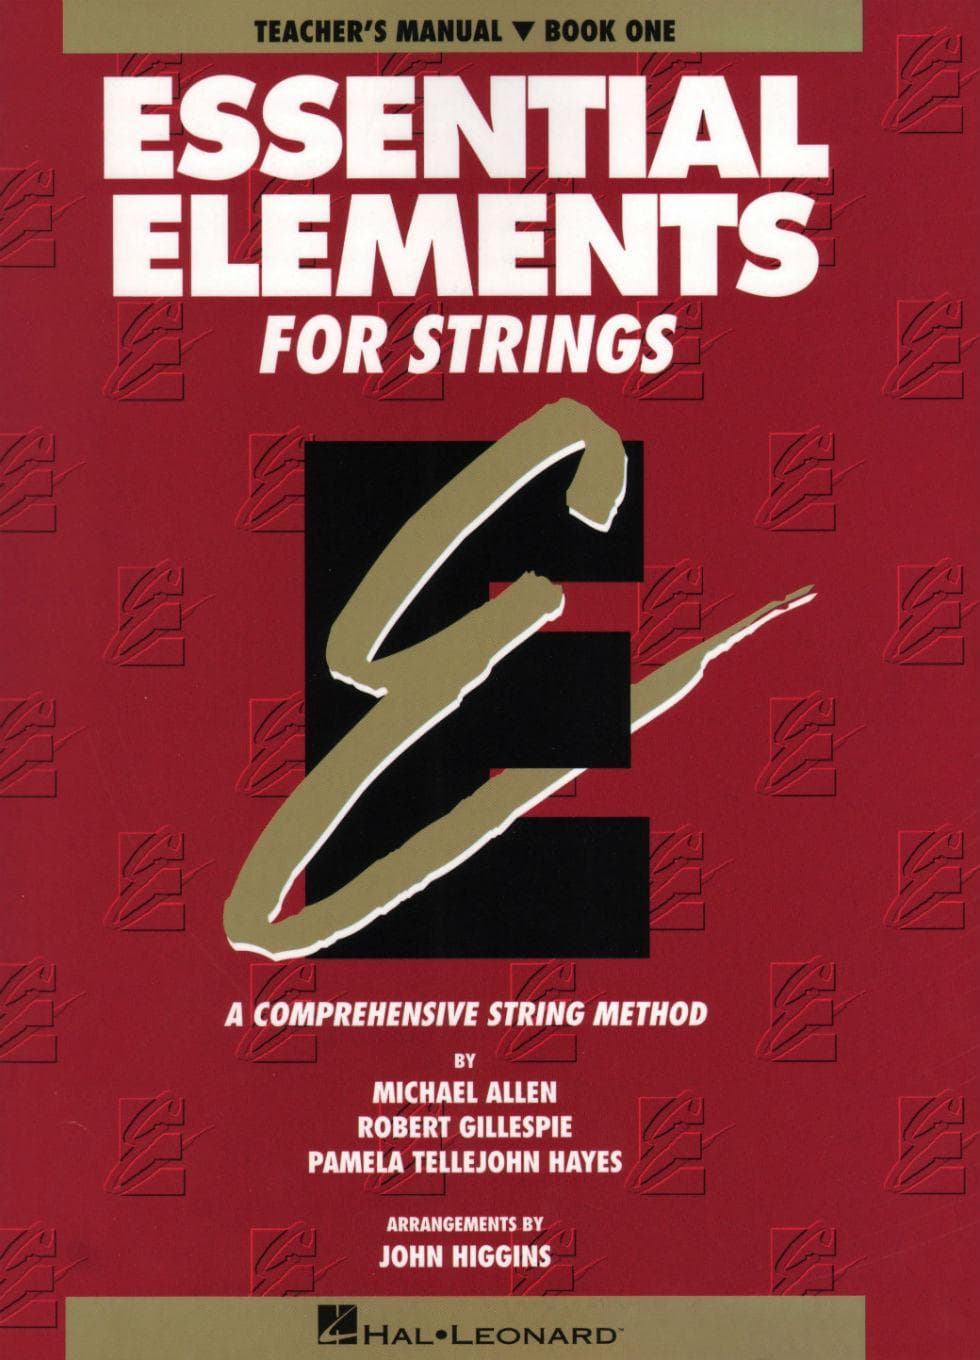 Essential Elements For Strings, Book 1 - Teacher Manual - by Allen/Gillespie/Hayes - Hal Leonard Publication